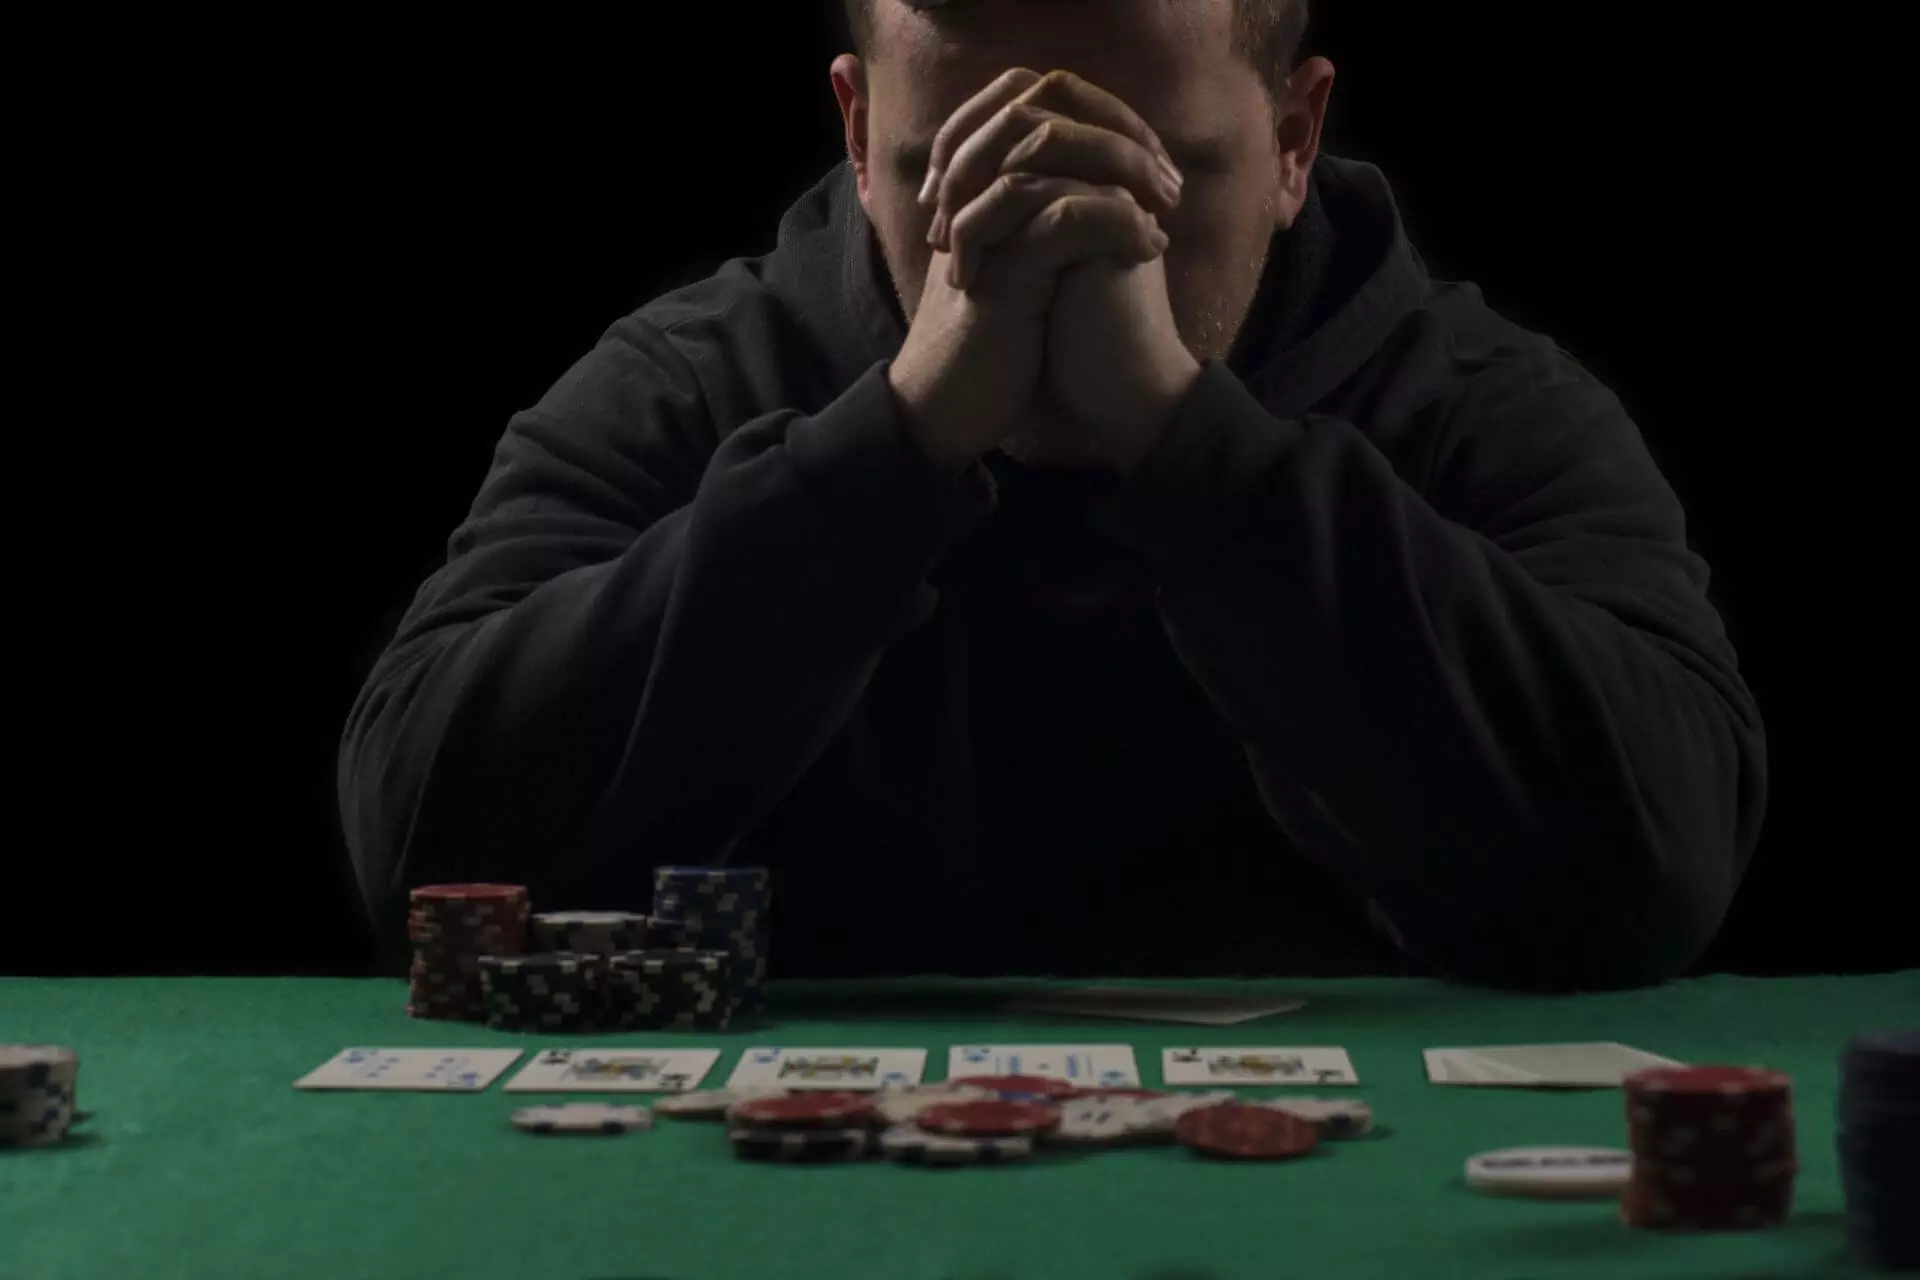 Powerless over gambling